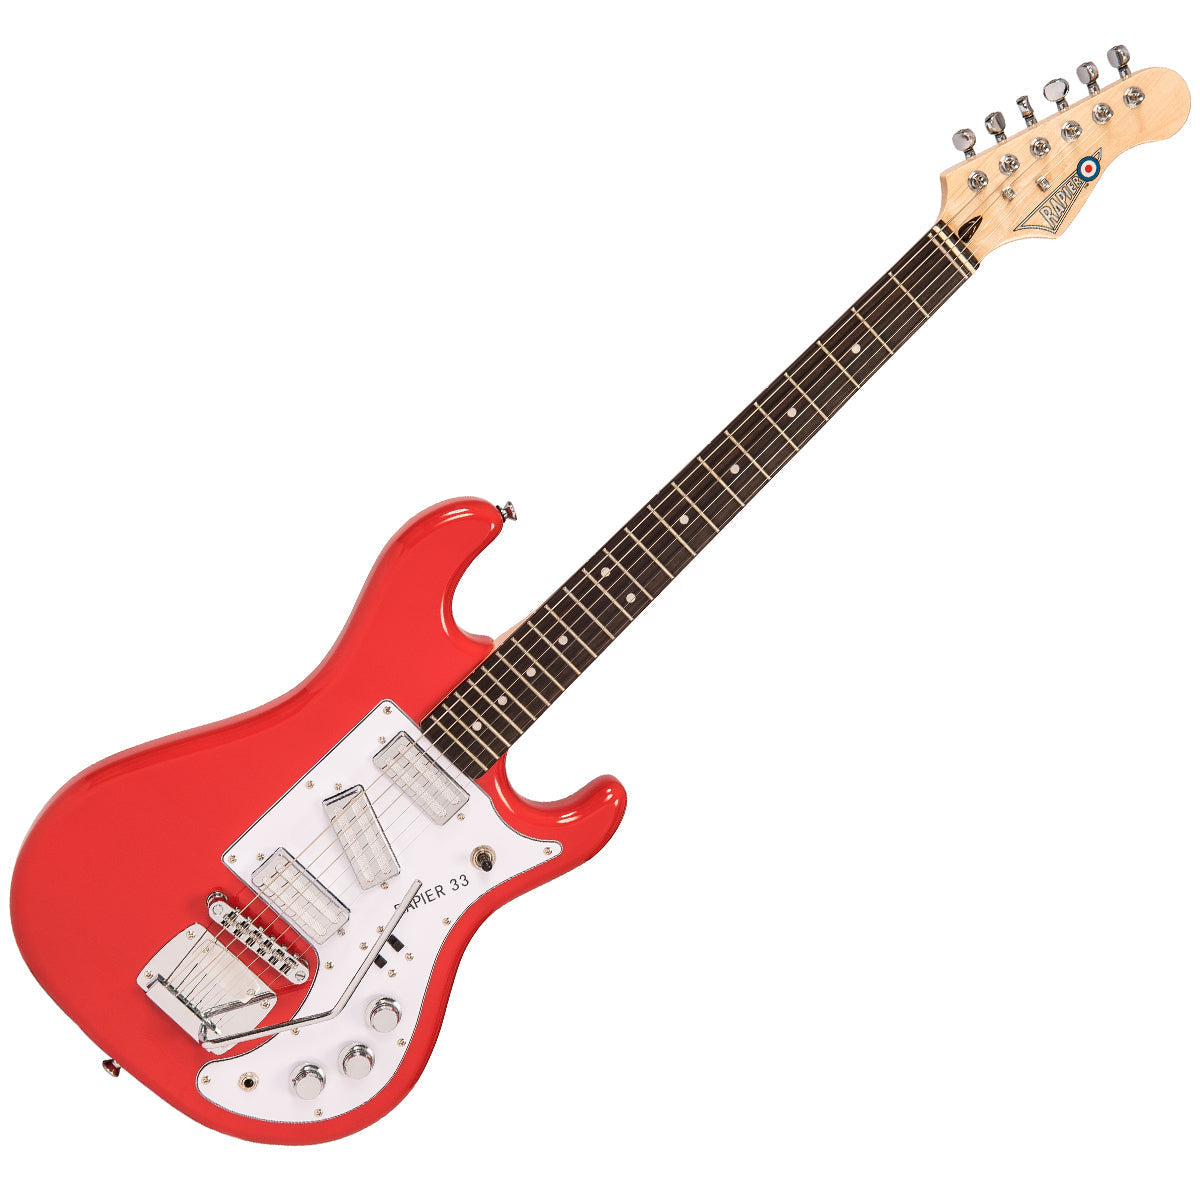 Rapier 33 Electric Guitar ~ Fiesta Red, Electric Guitar for sale at Richards Guitars.